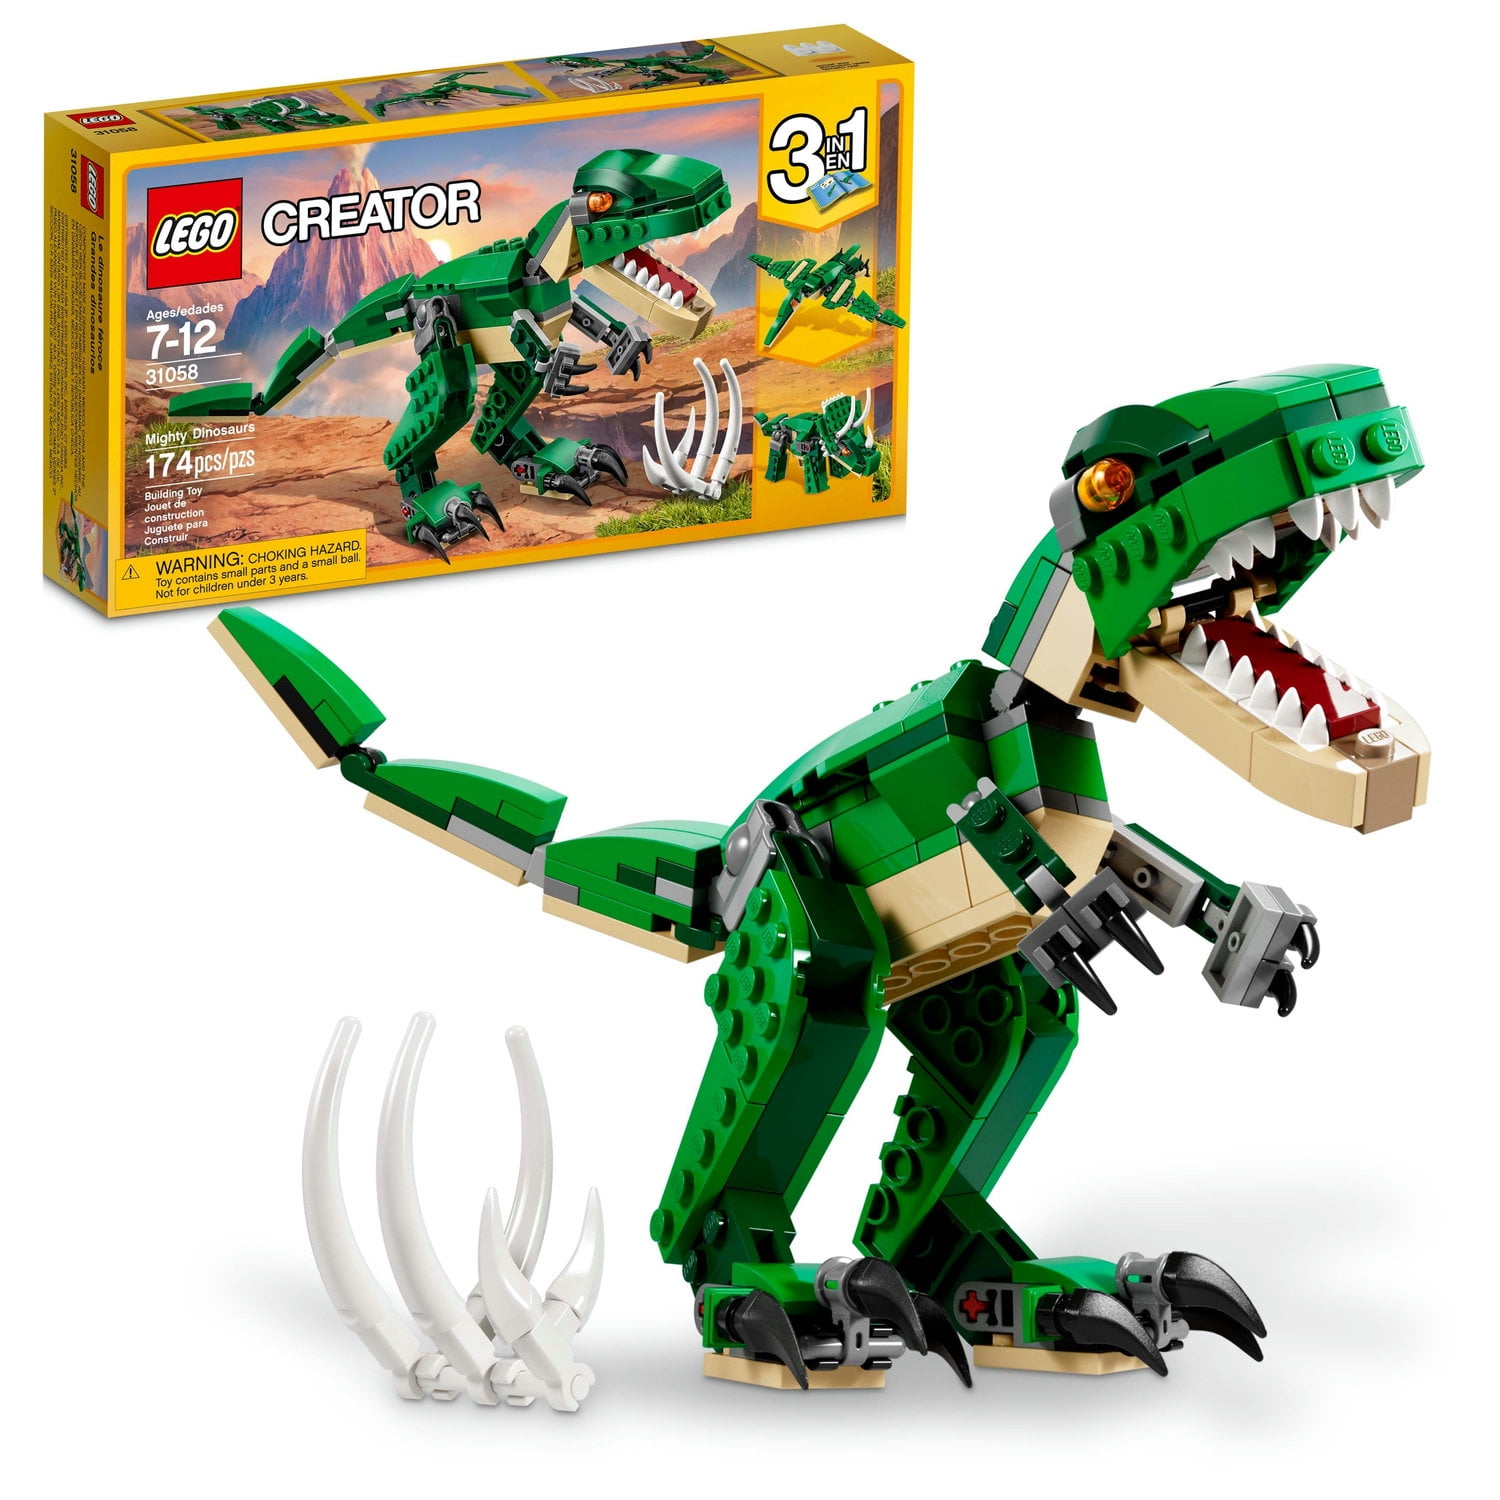 31058 LEGO Creator Mighty Dinosaurs